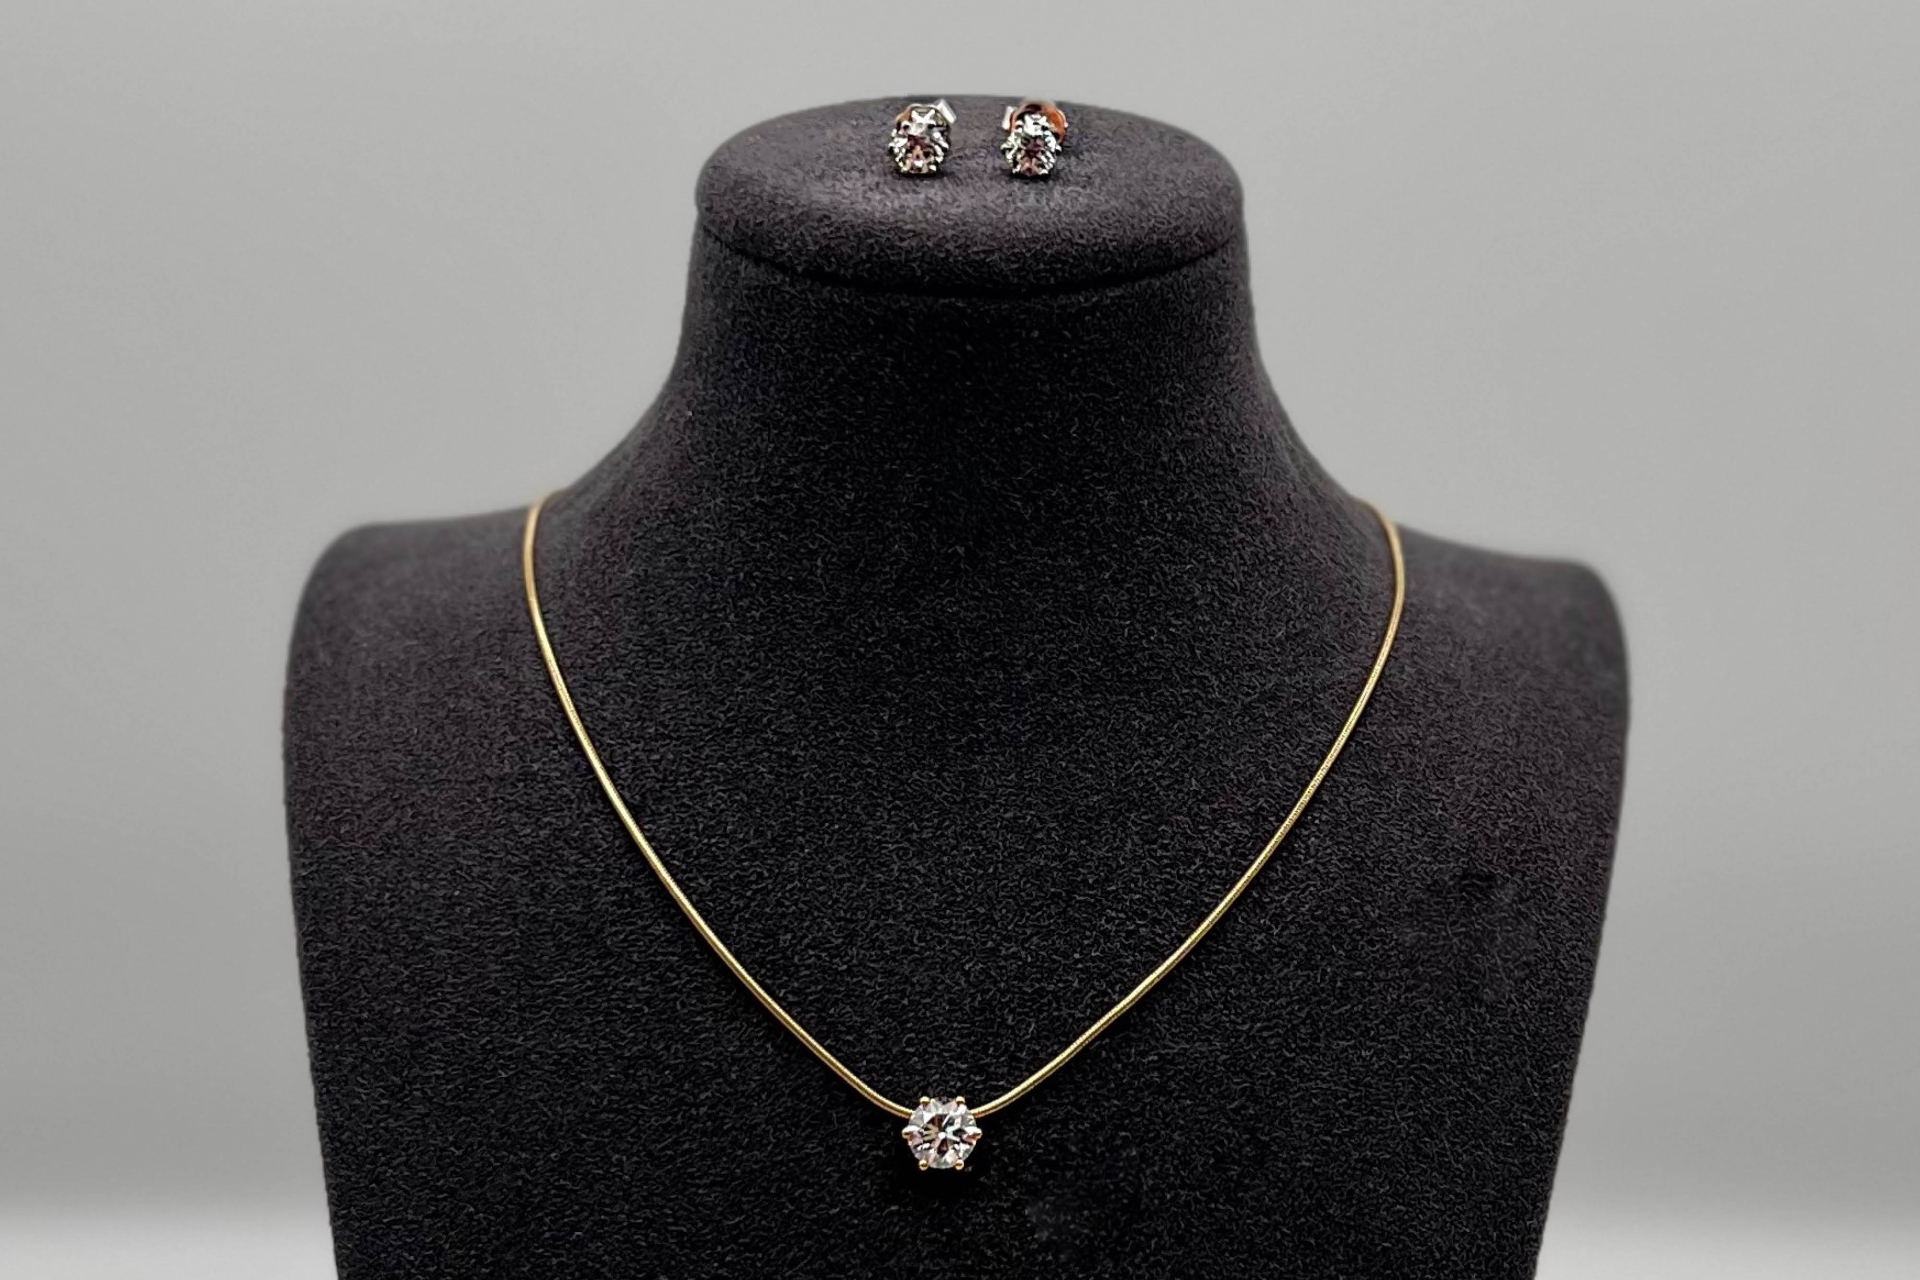 jennifer-kathe-schmuckfavoriten-luxury-jewelry-juwelier-brillantschmuck-diamanten